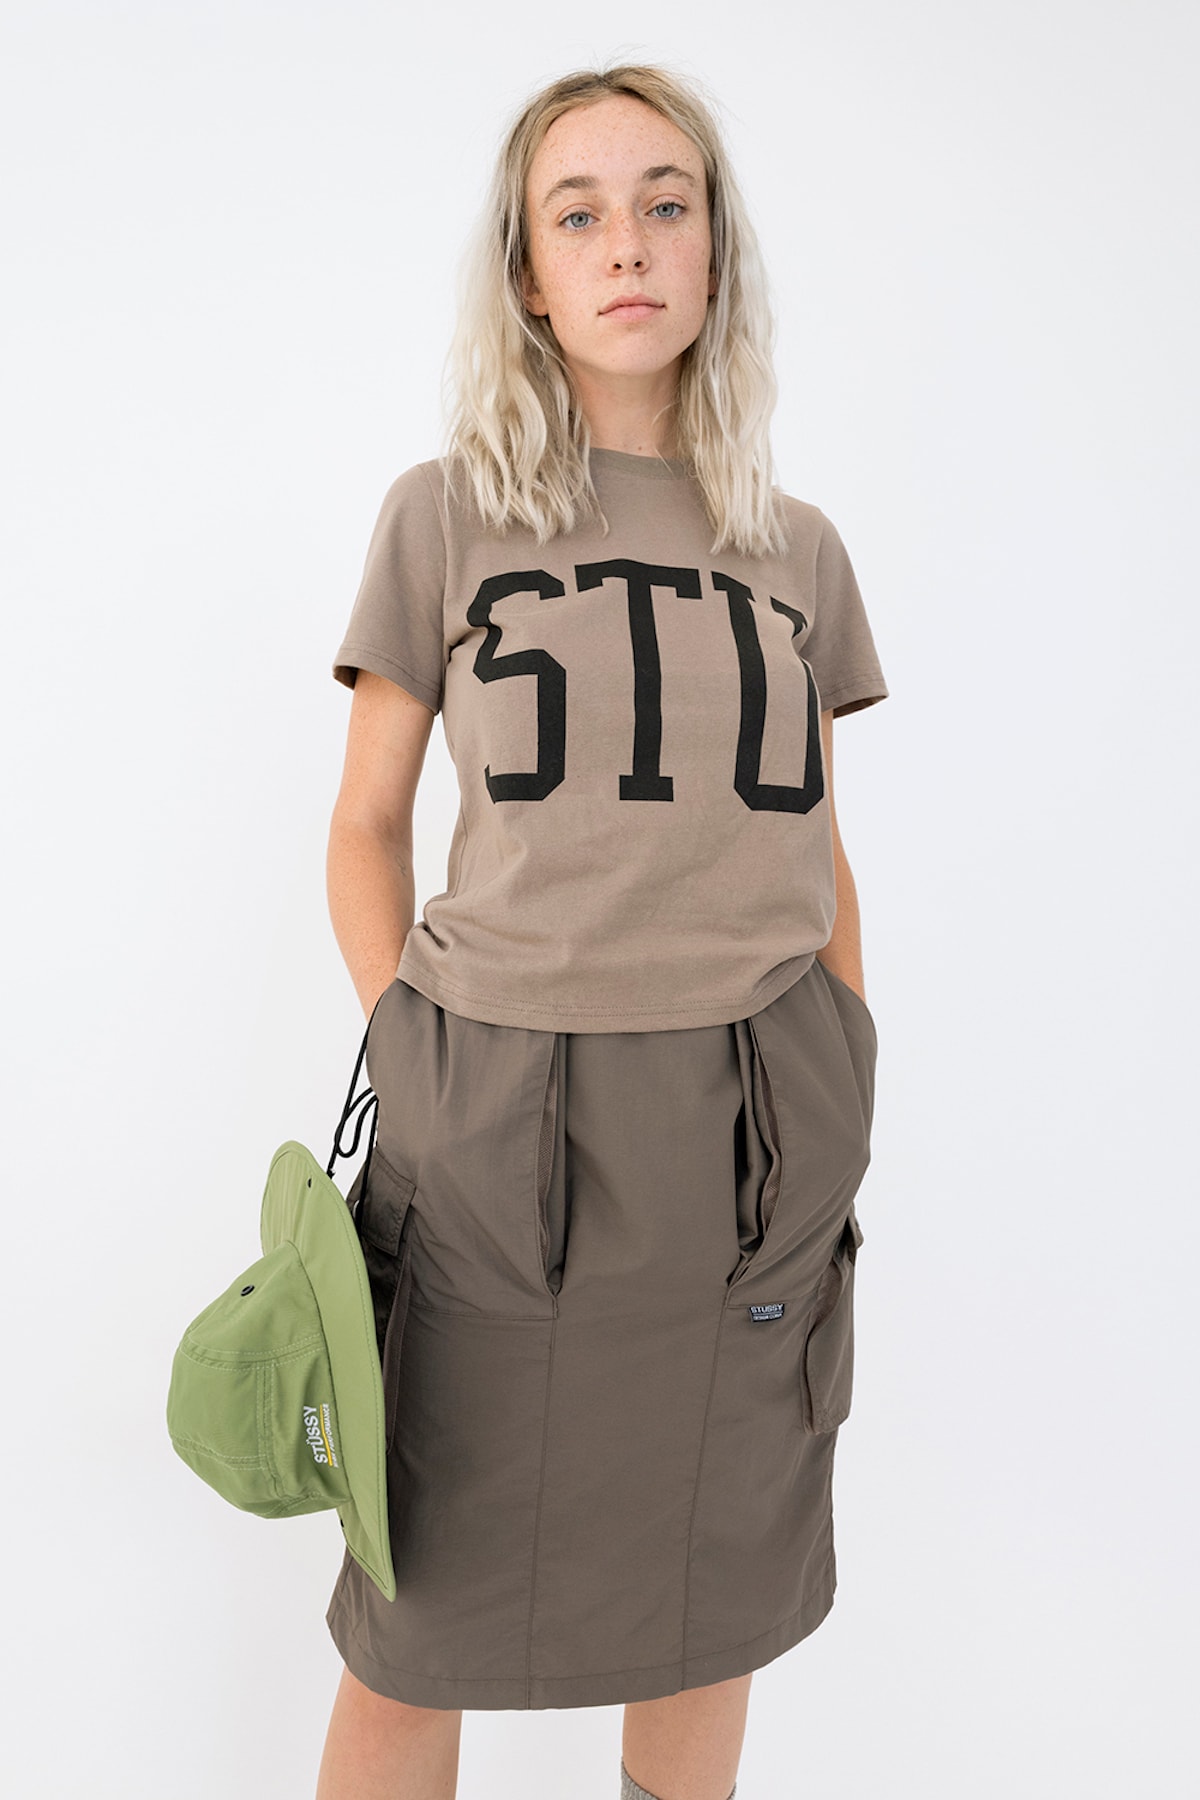 Stussy Summer 2019 Streetwear Lookbook Colorful Logo SS19 